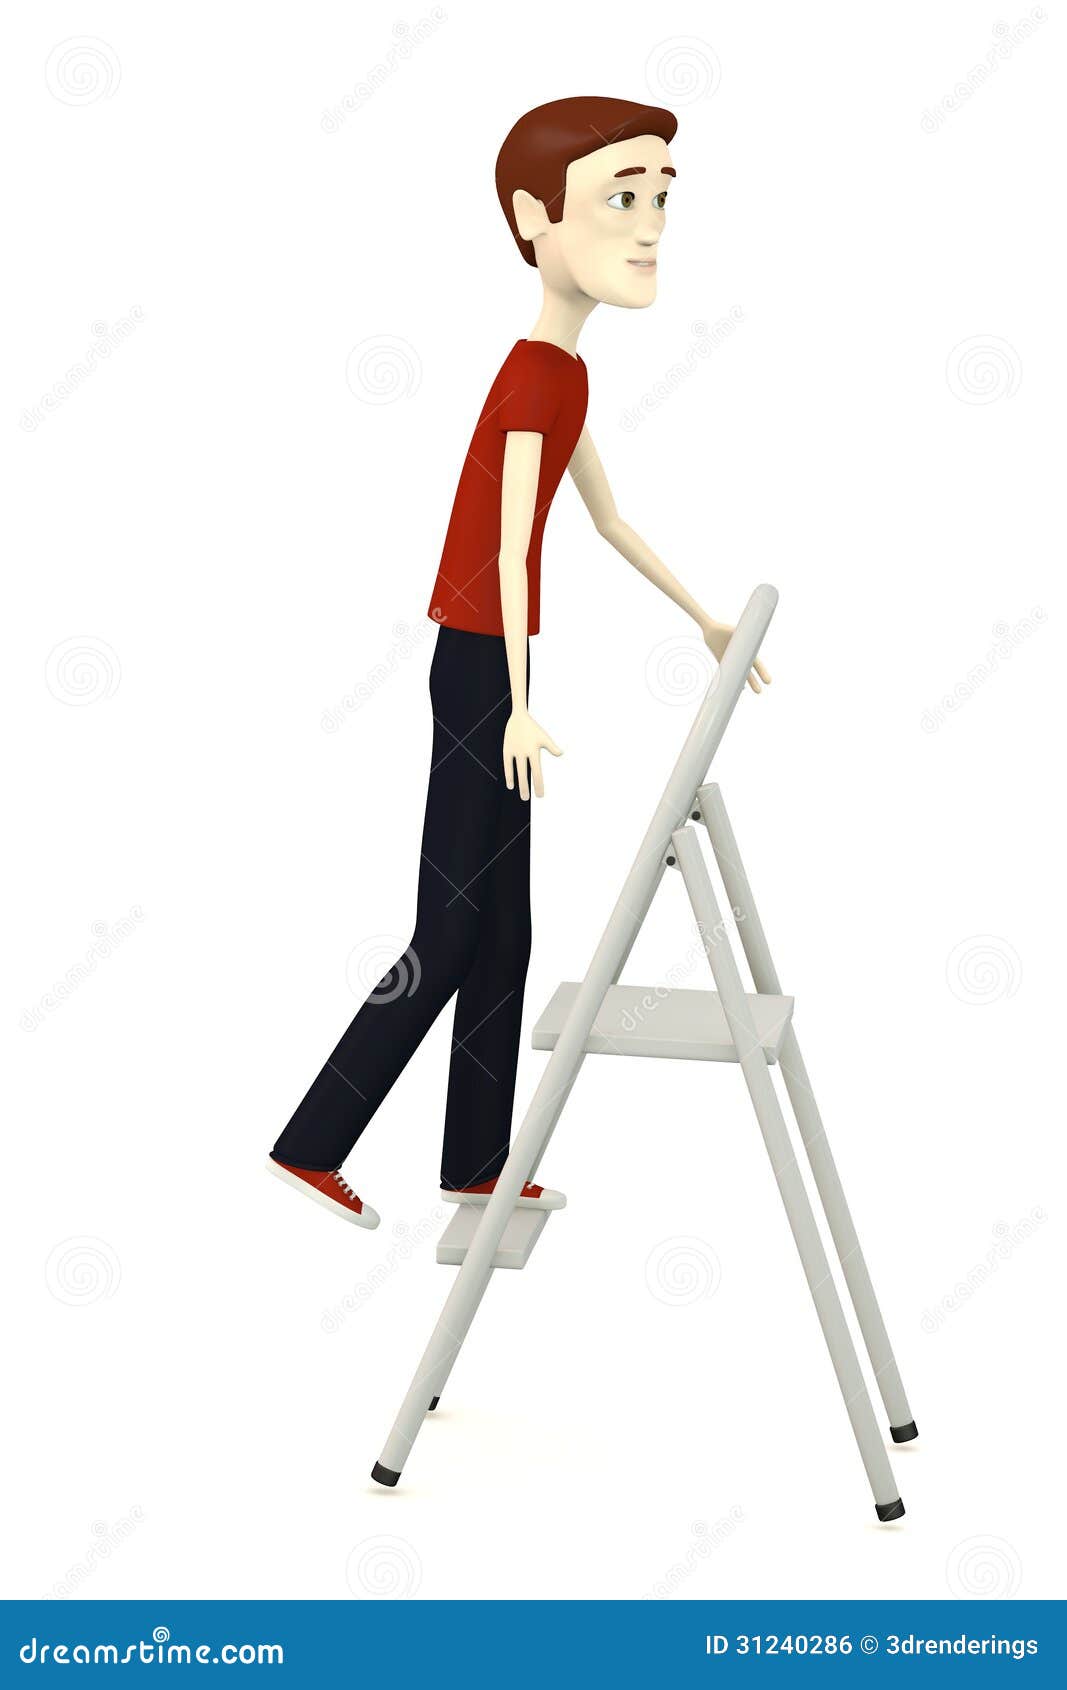 clipart man on ladder - photo #30